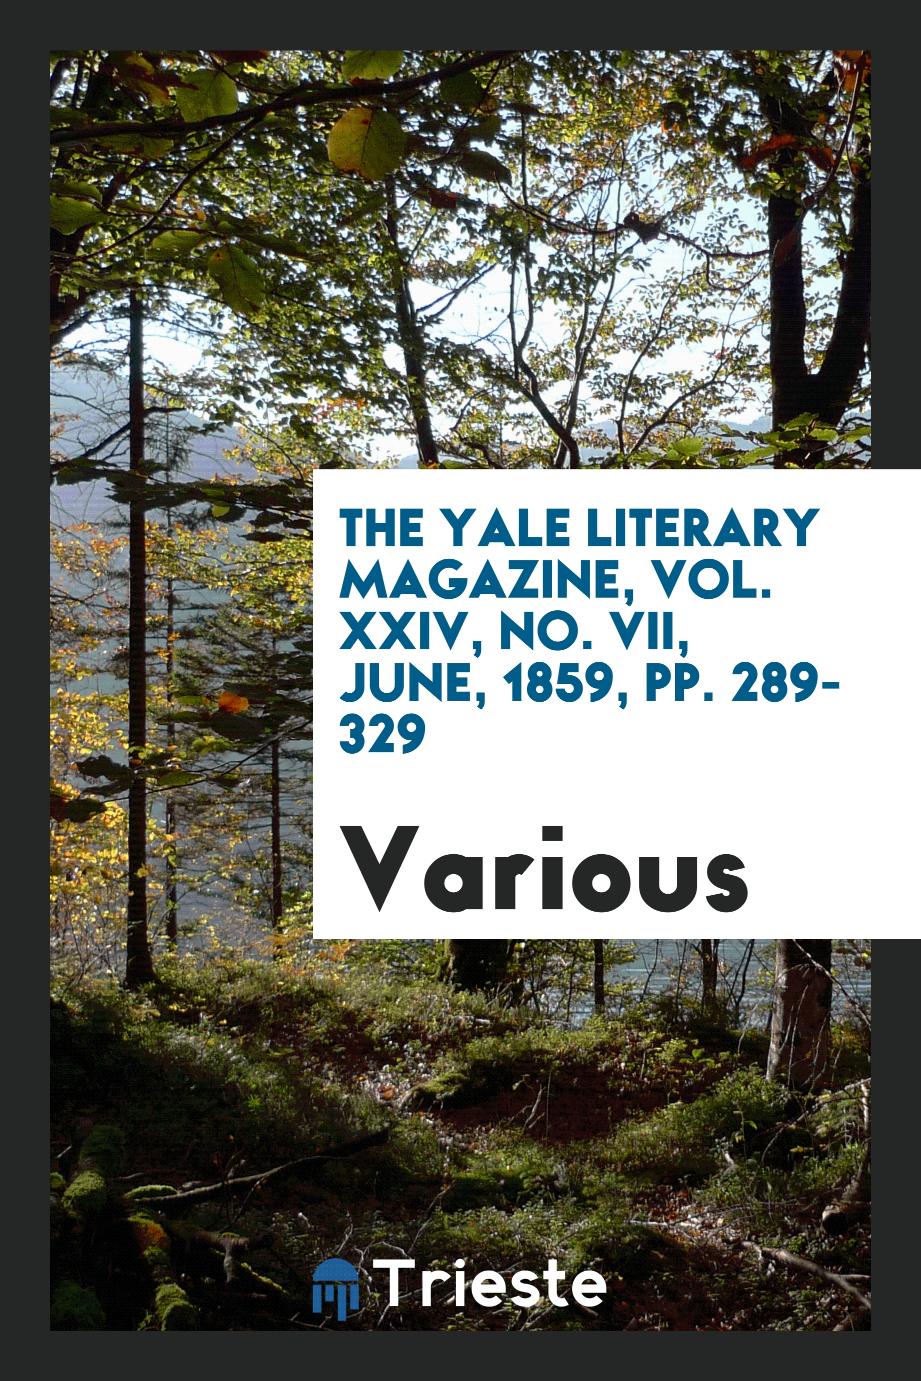 The Yale literary magazine, Vol. XXIV, No. VII, June, 1859, pp. 289-329